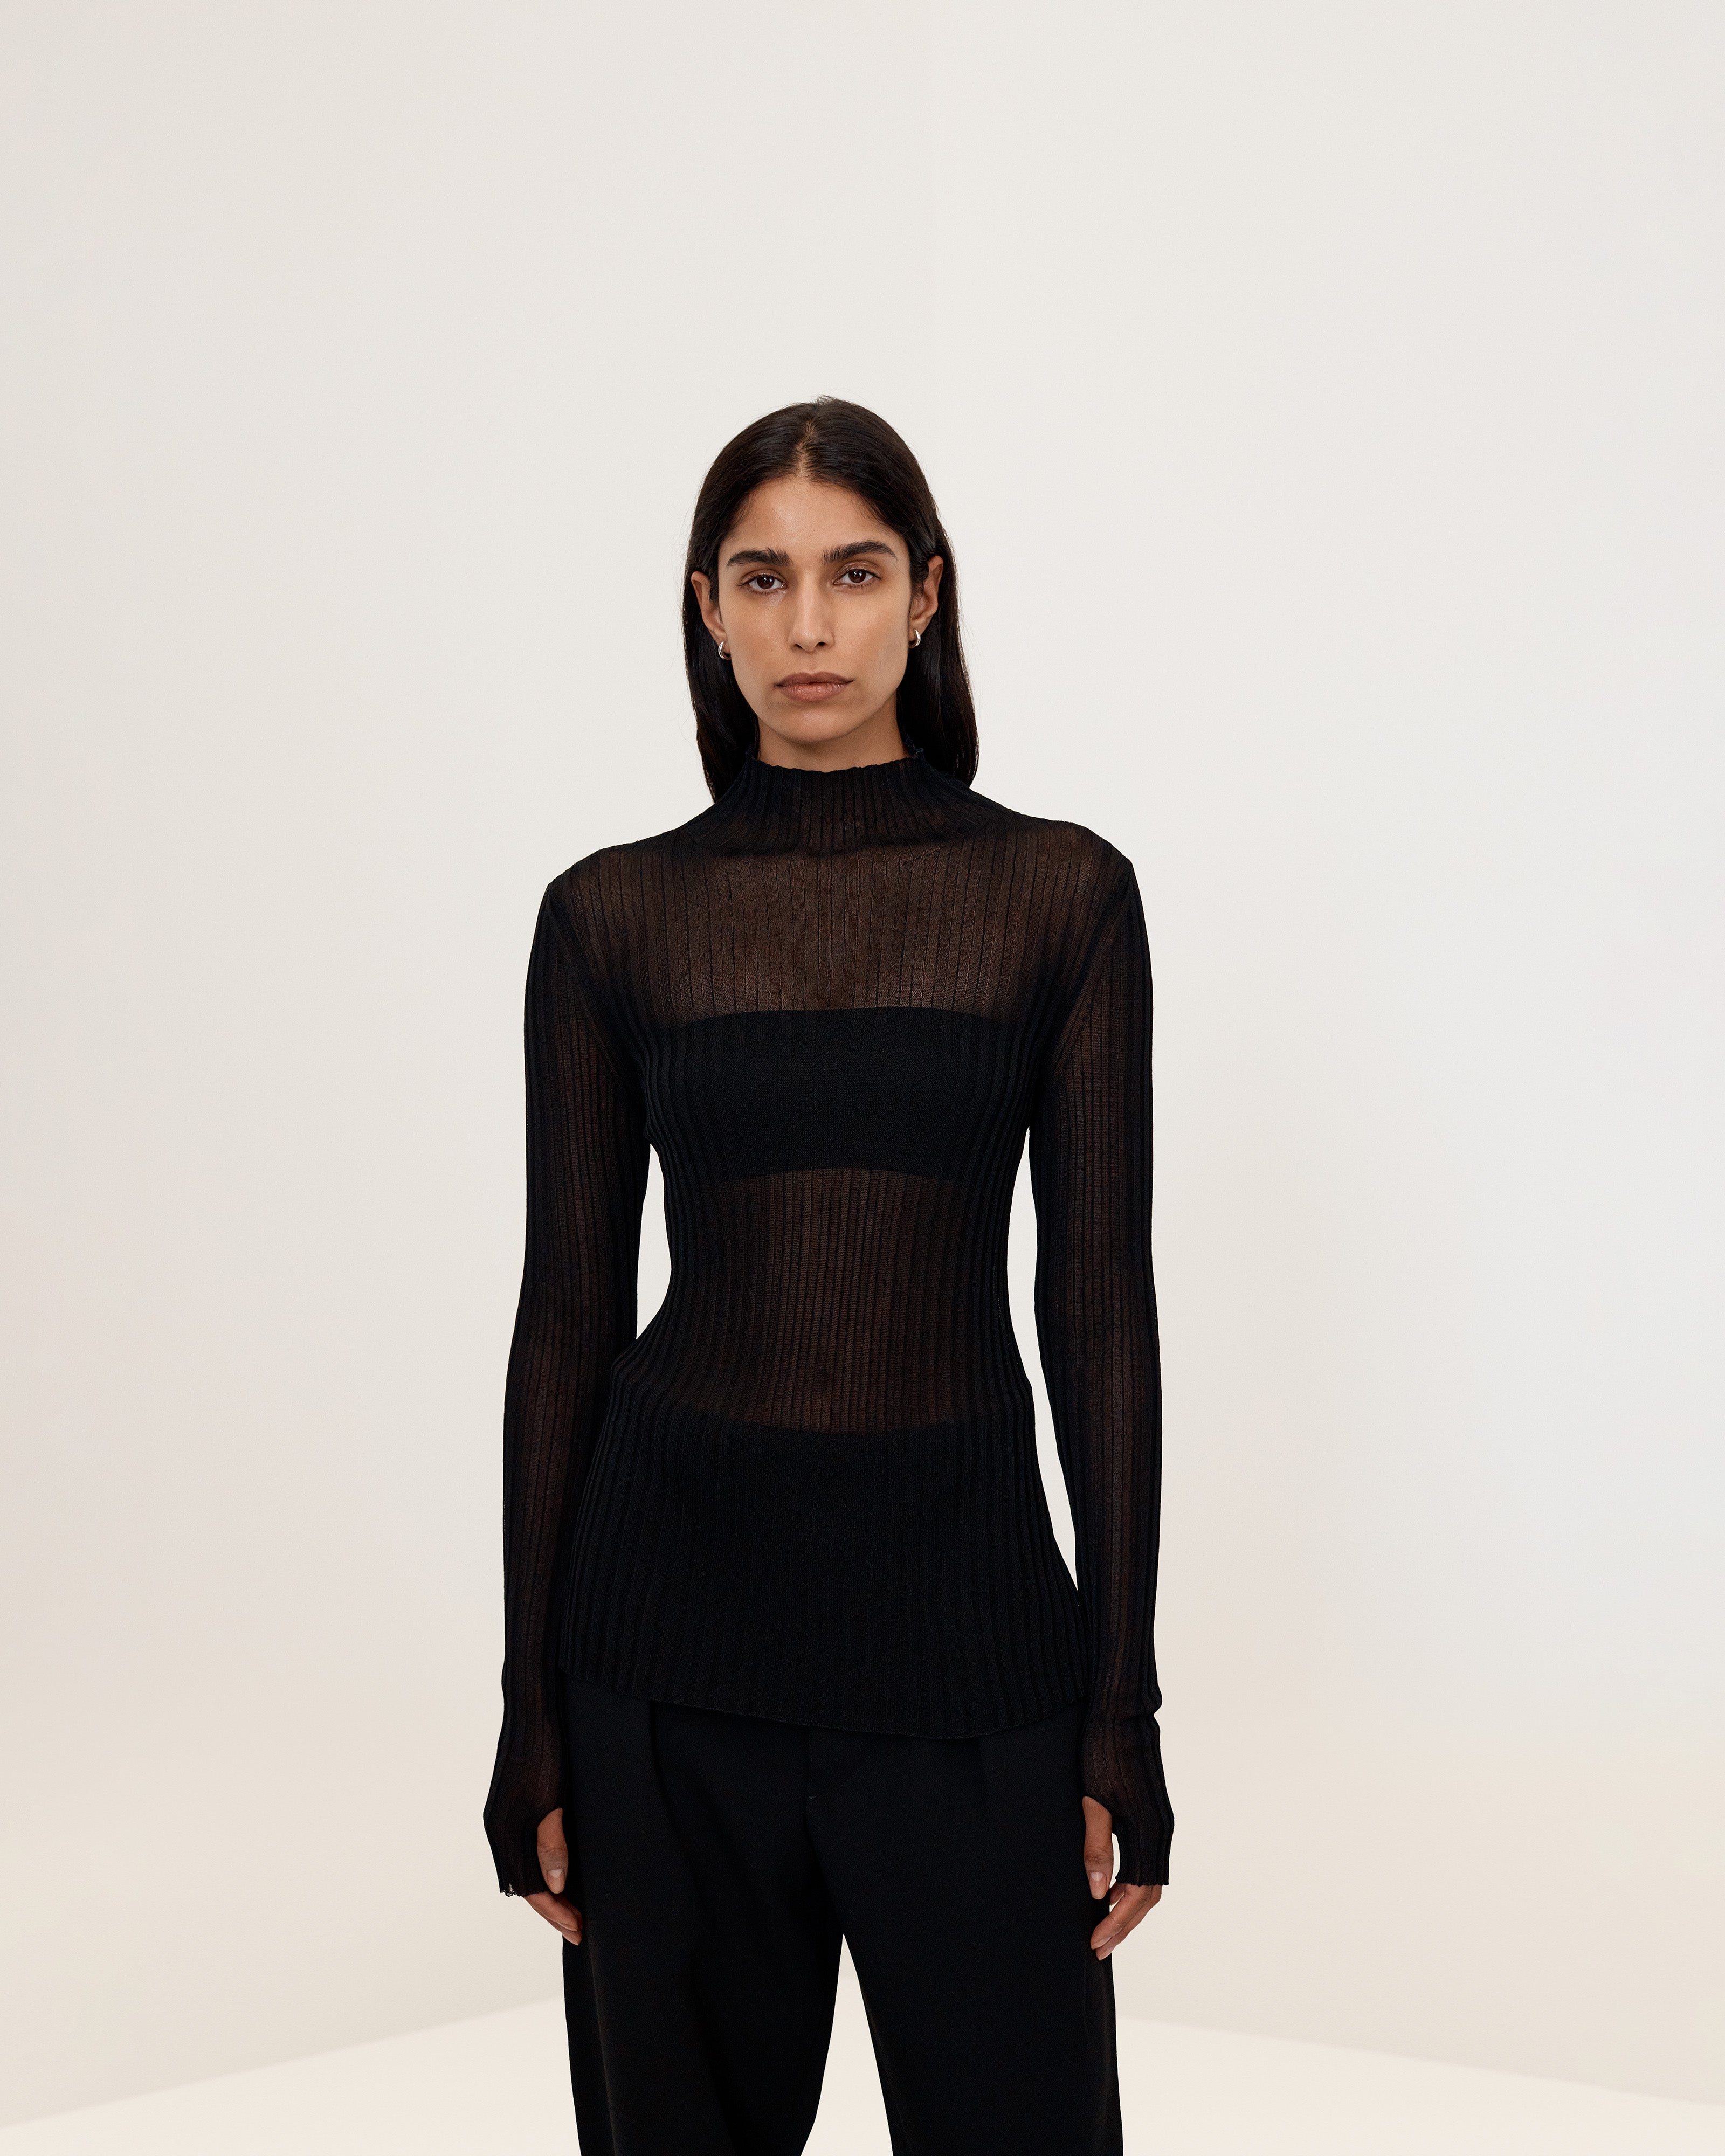 sener-besim-the-rib-knit-turtleneck-black-knitwear